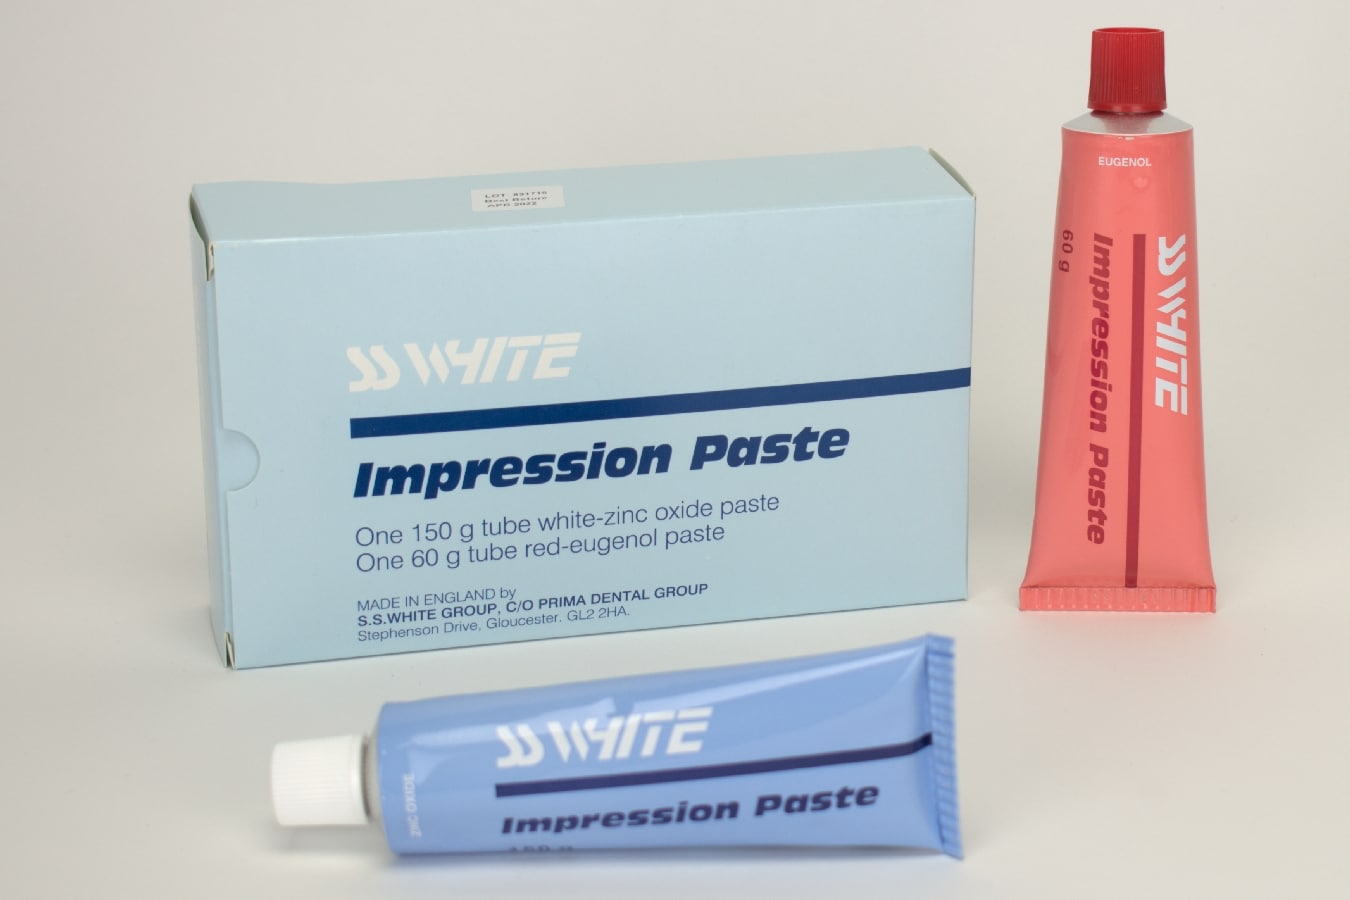 SSWhite Impression Paste 210g